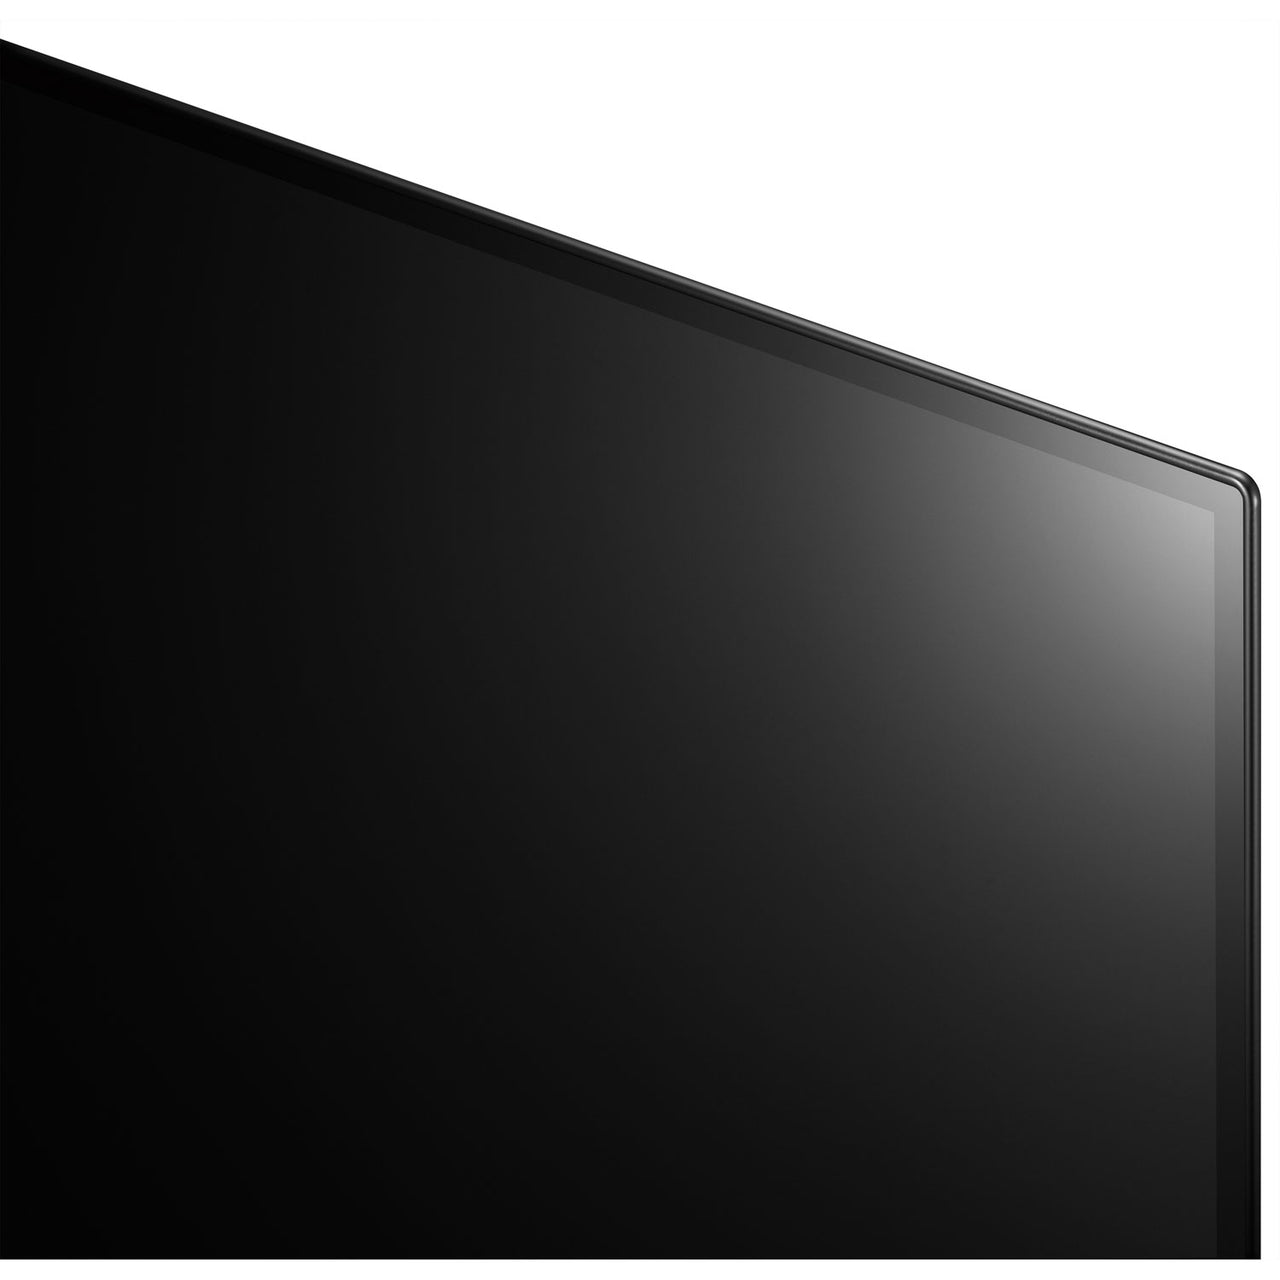 LG 65" 4K UHD HDR OLED webOS Smart TV (OLED65C1AUB) - 2021